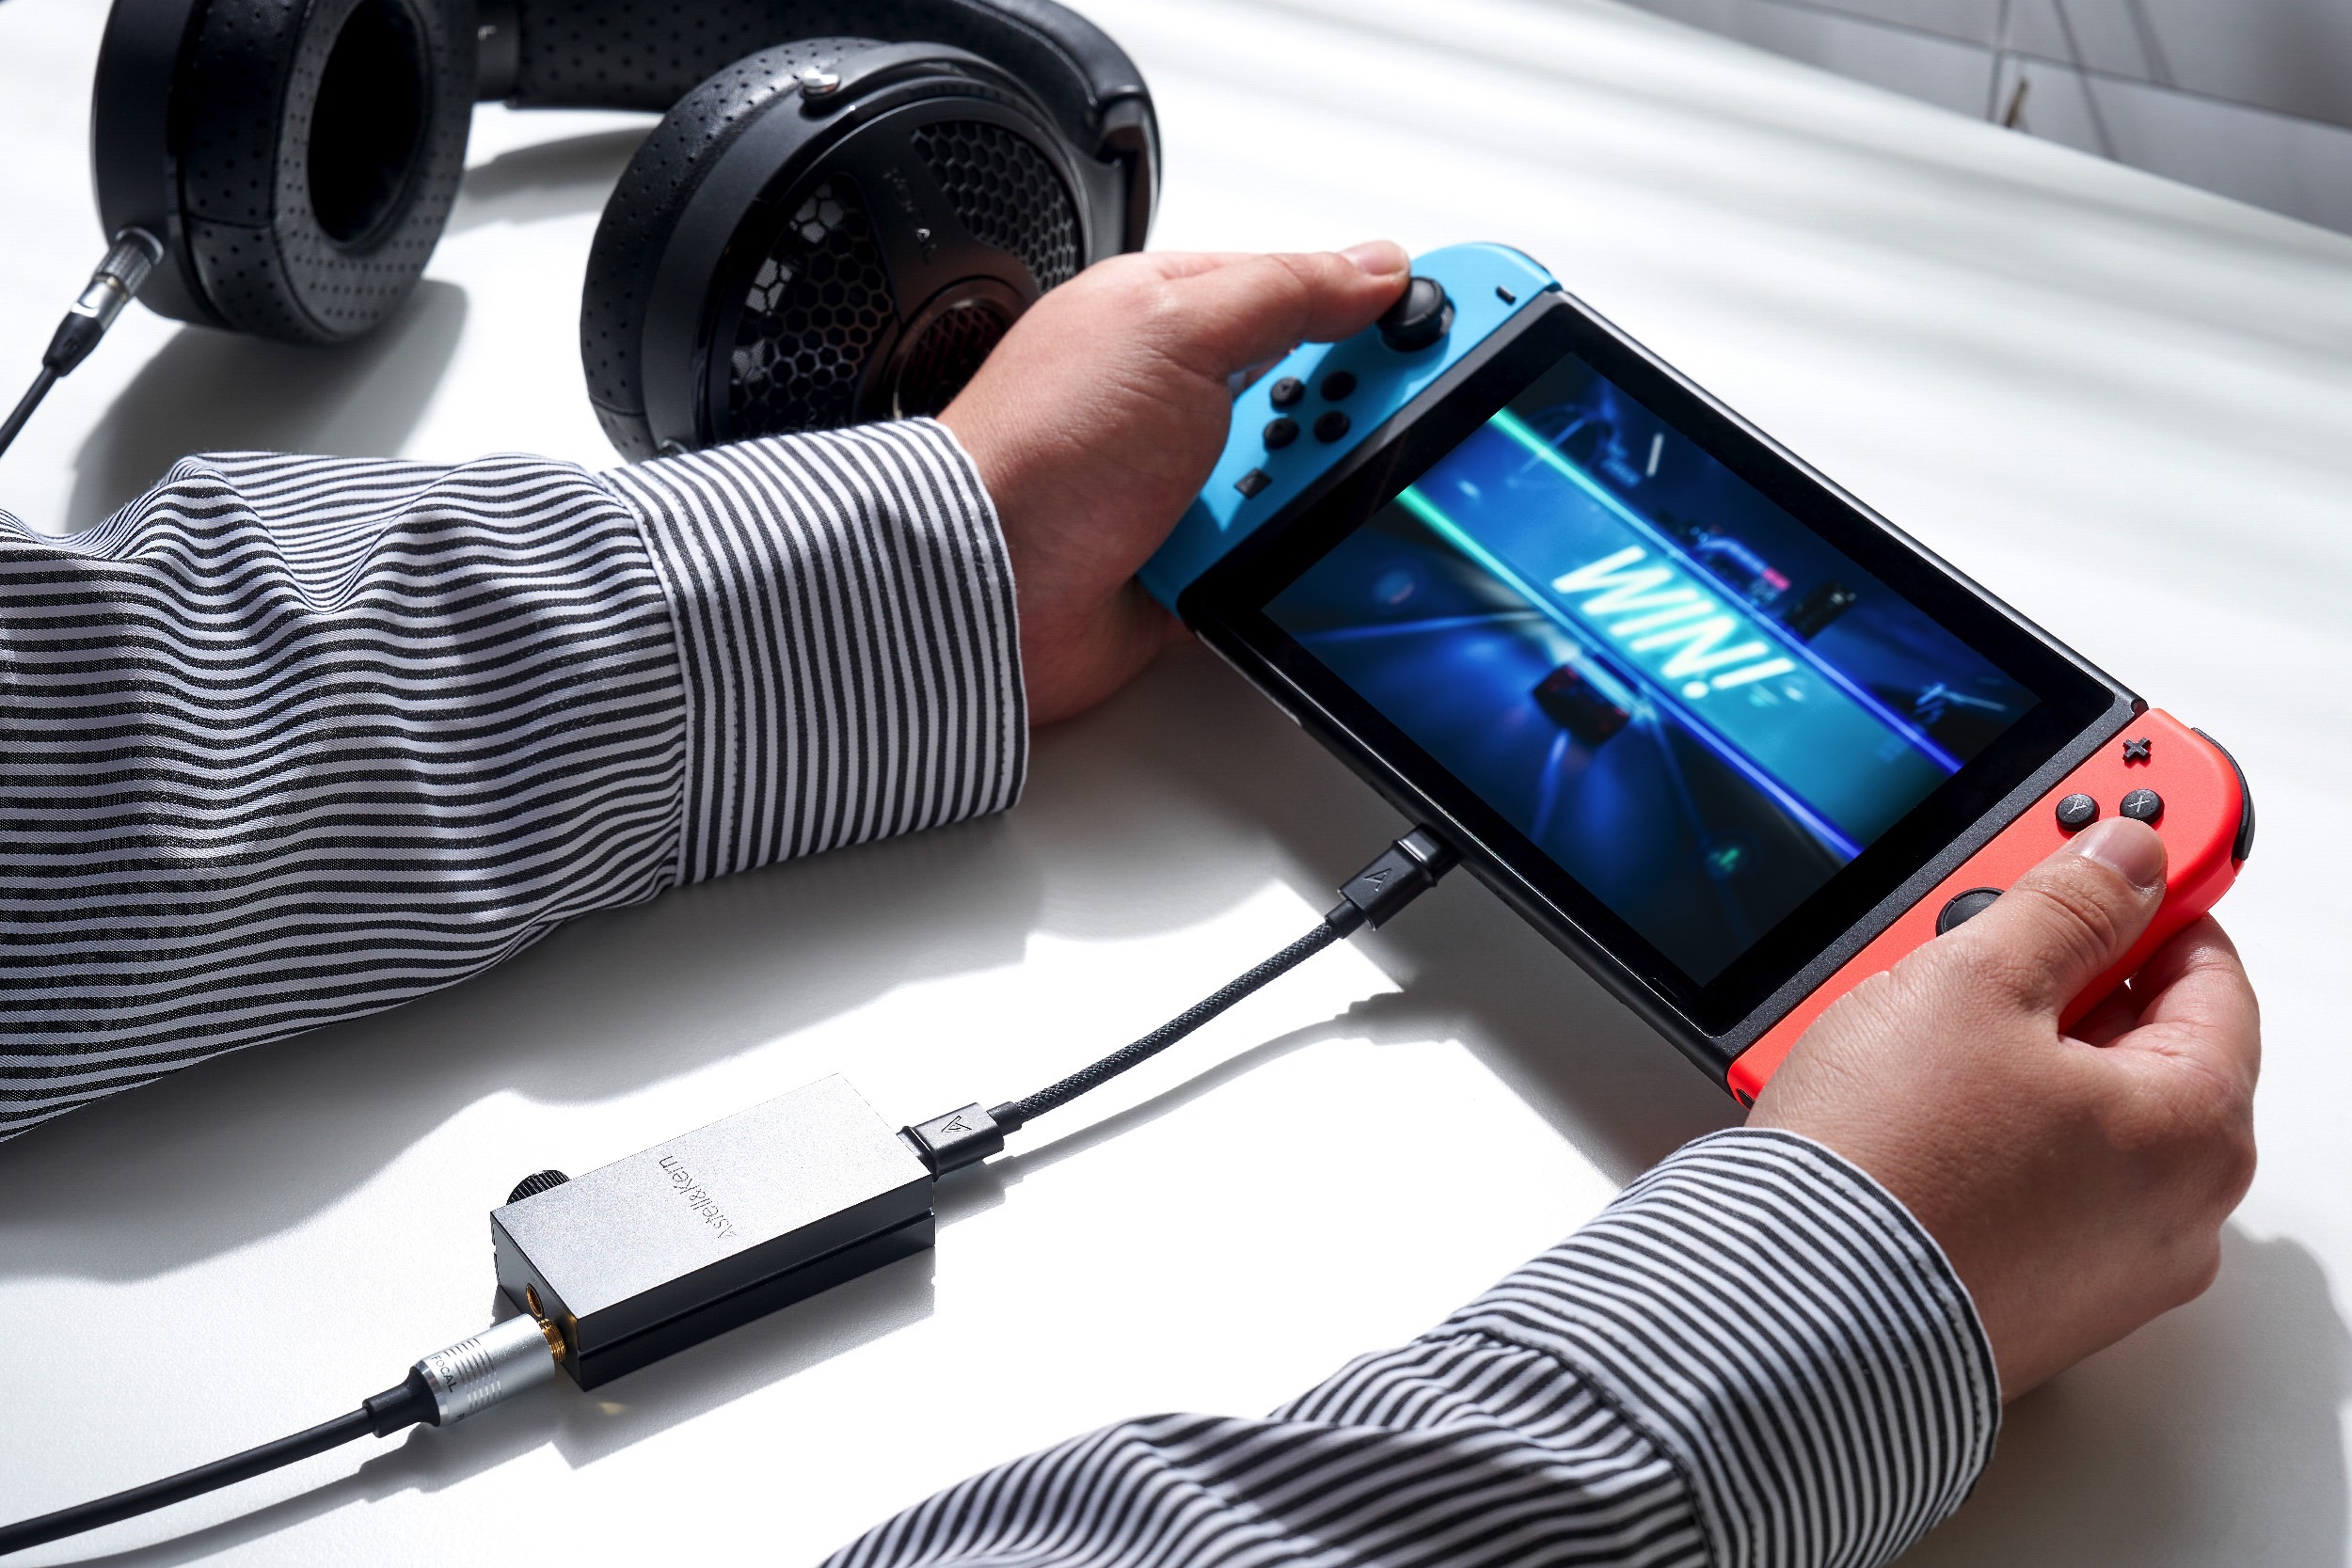 Astell&Kern's new headphone DAC is PlayStation-ready | Digital Trends